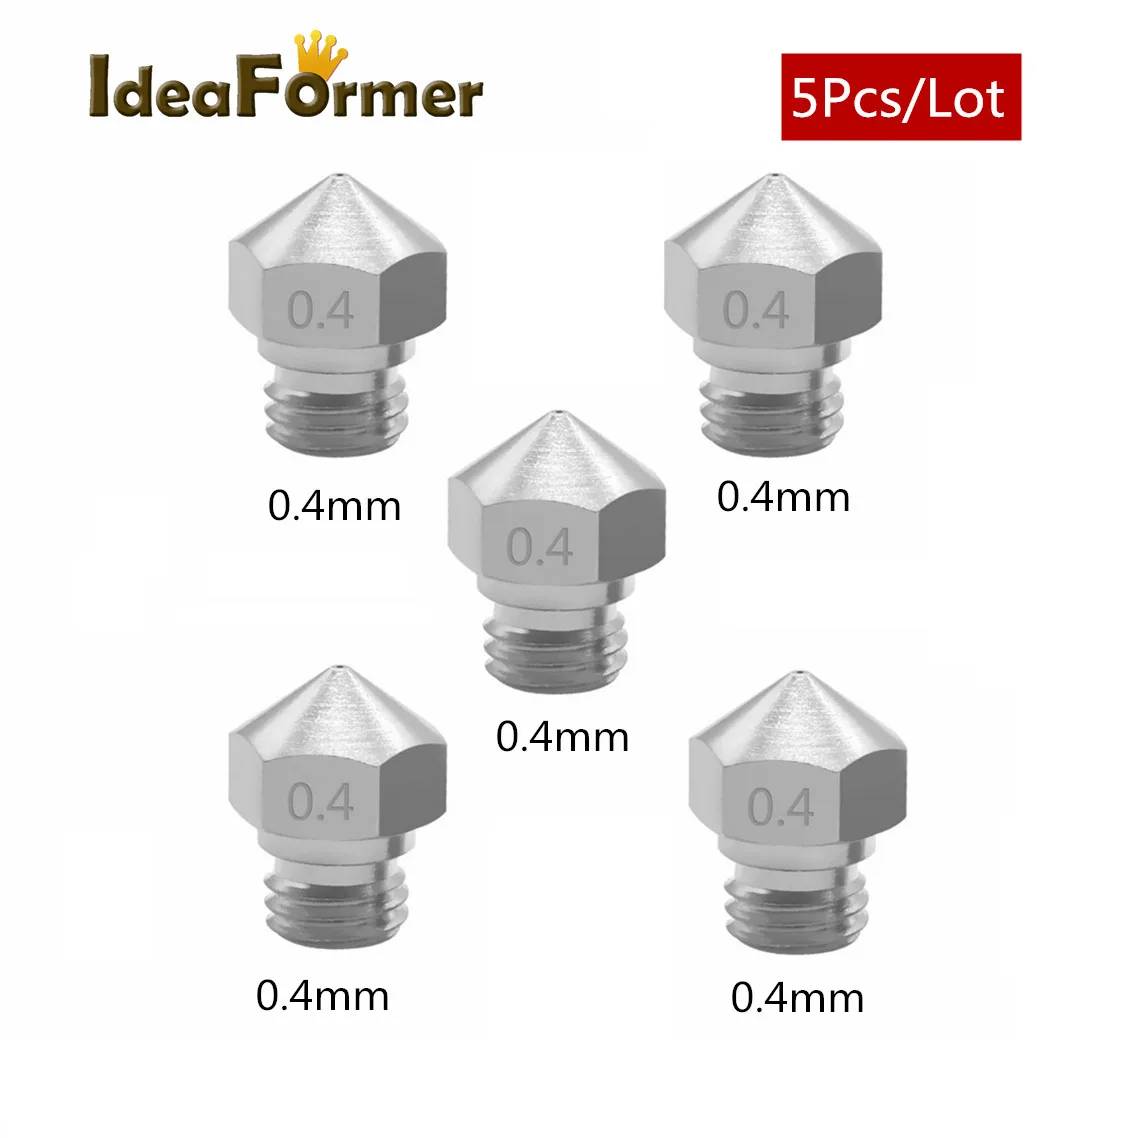 IdeaFormer 5Pcs/Lot 3D Printer Accessories MK10 MK2 Stainless Steel Nozzle M7 Screw Thread Nozzle Bore 0.4mm For 1.75mm Filament